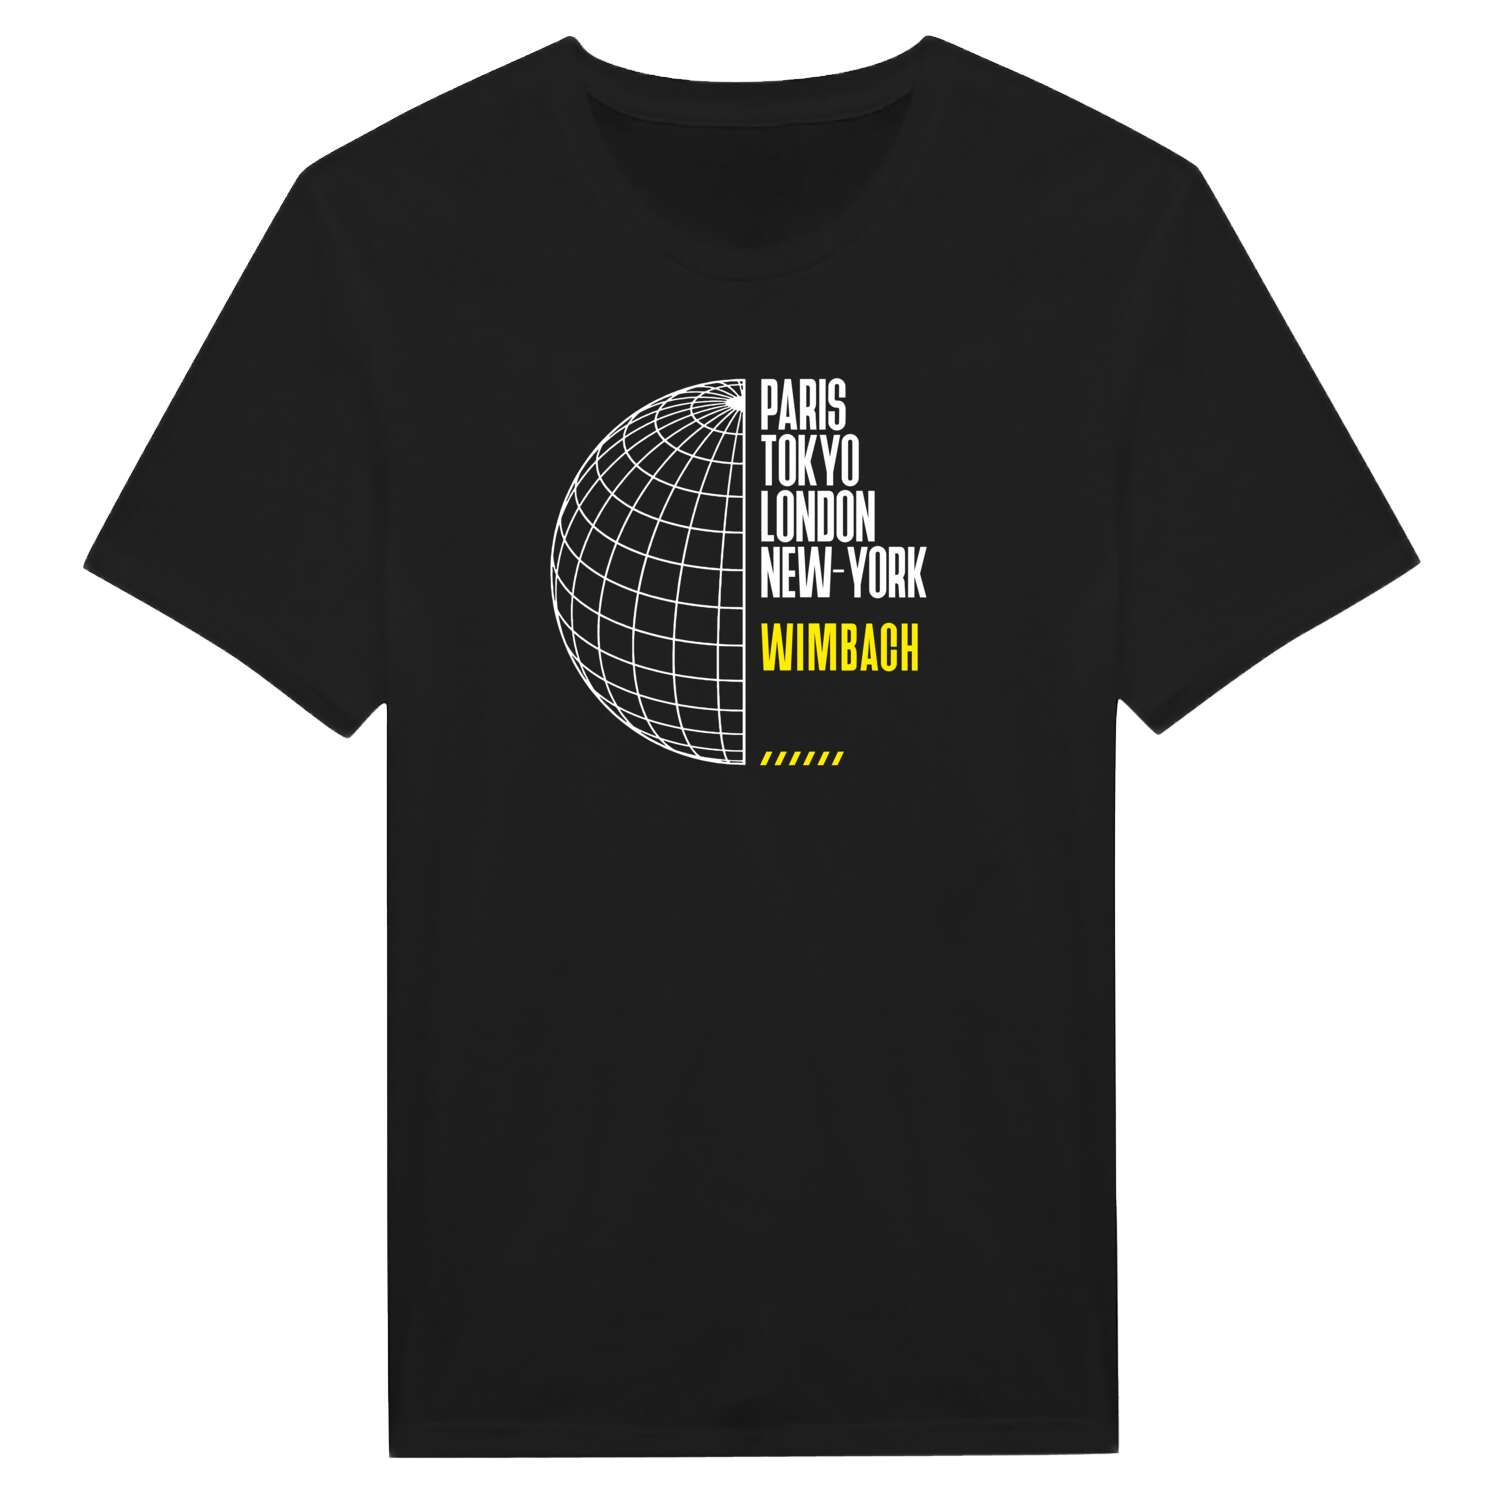 Wimbach T-Shirt »Paris Tokyo London«